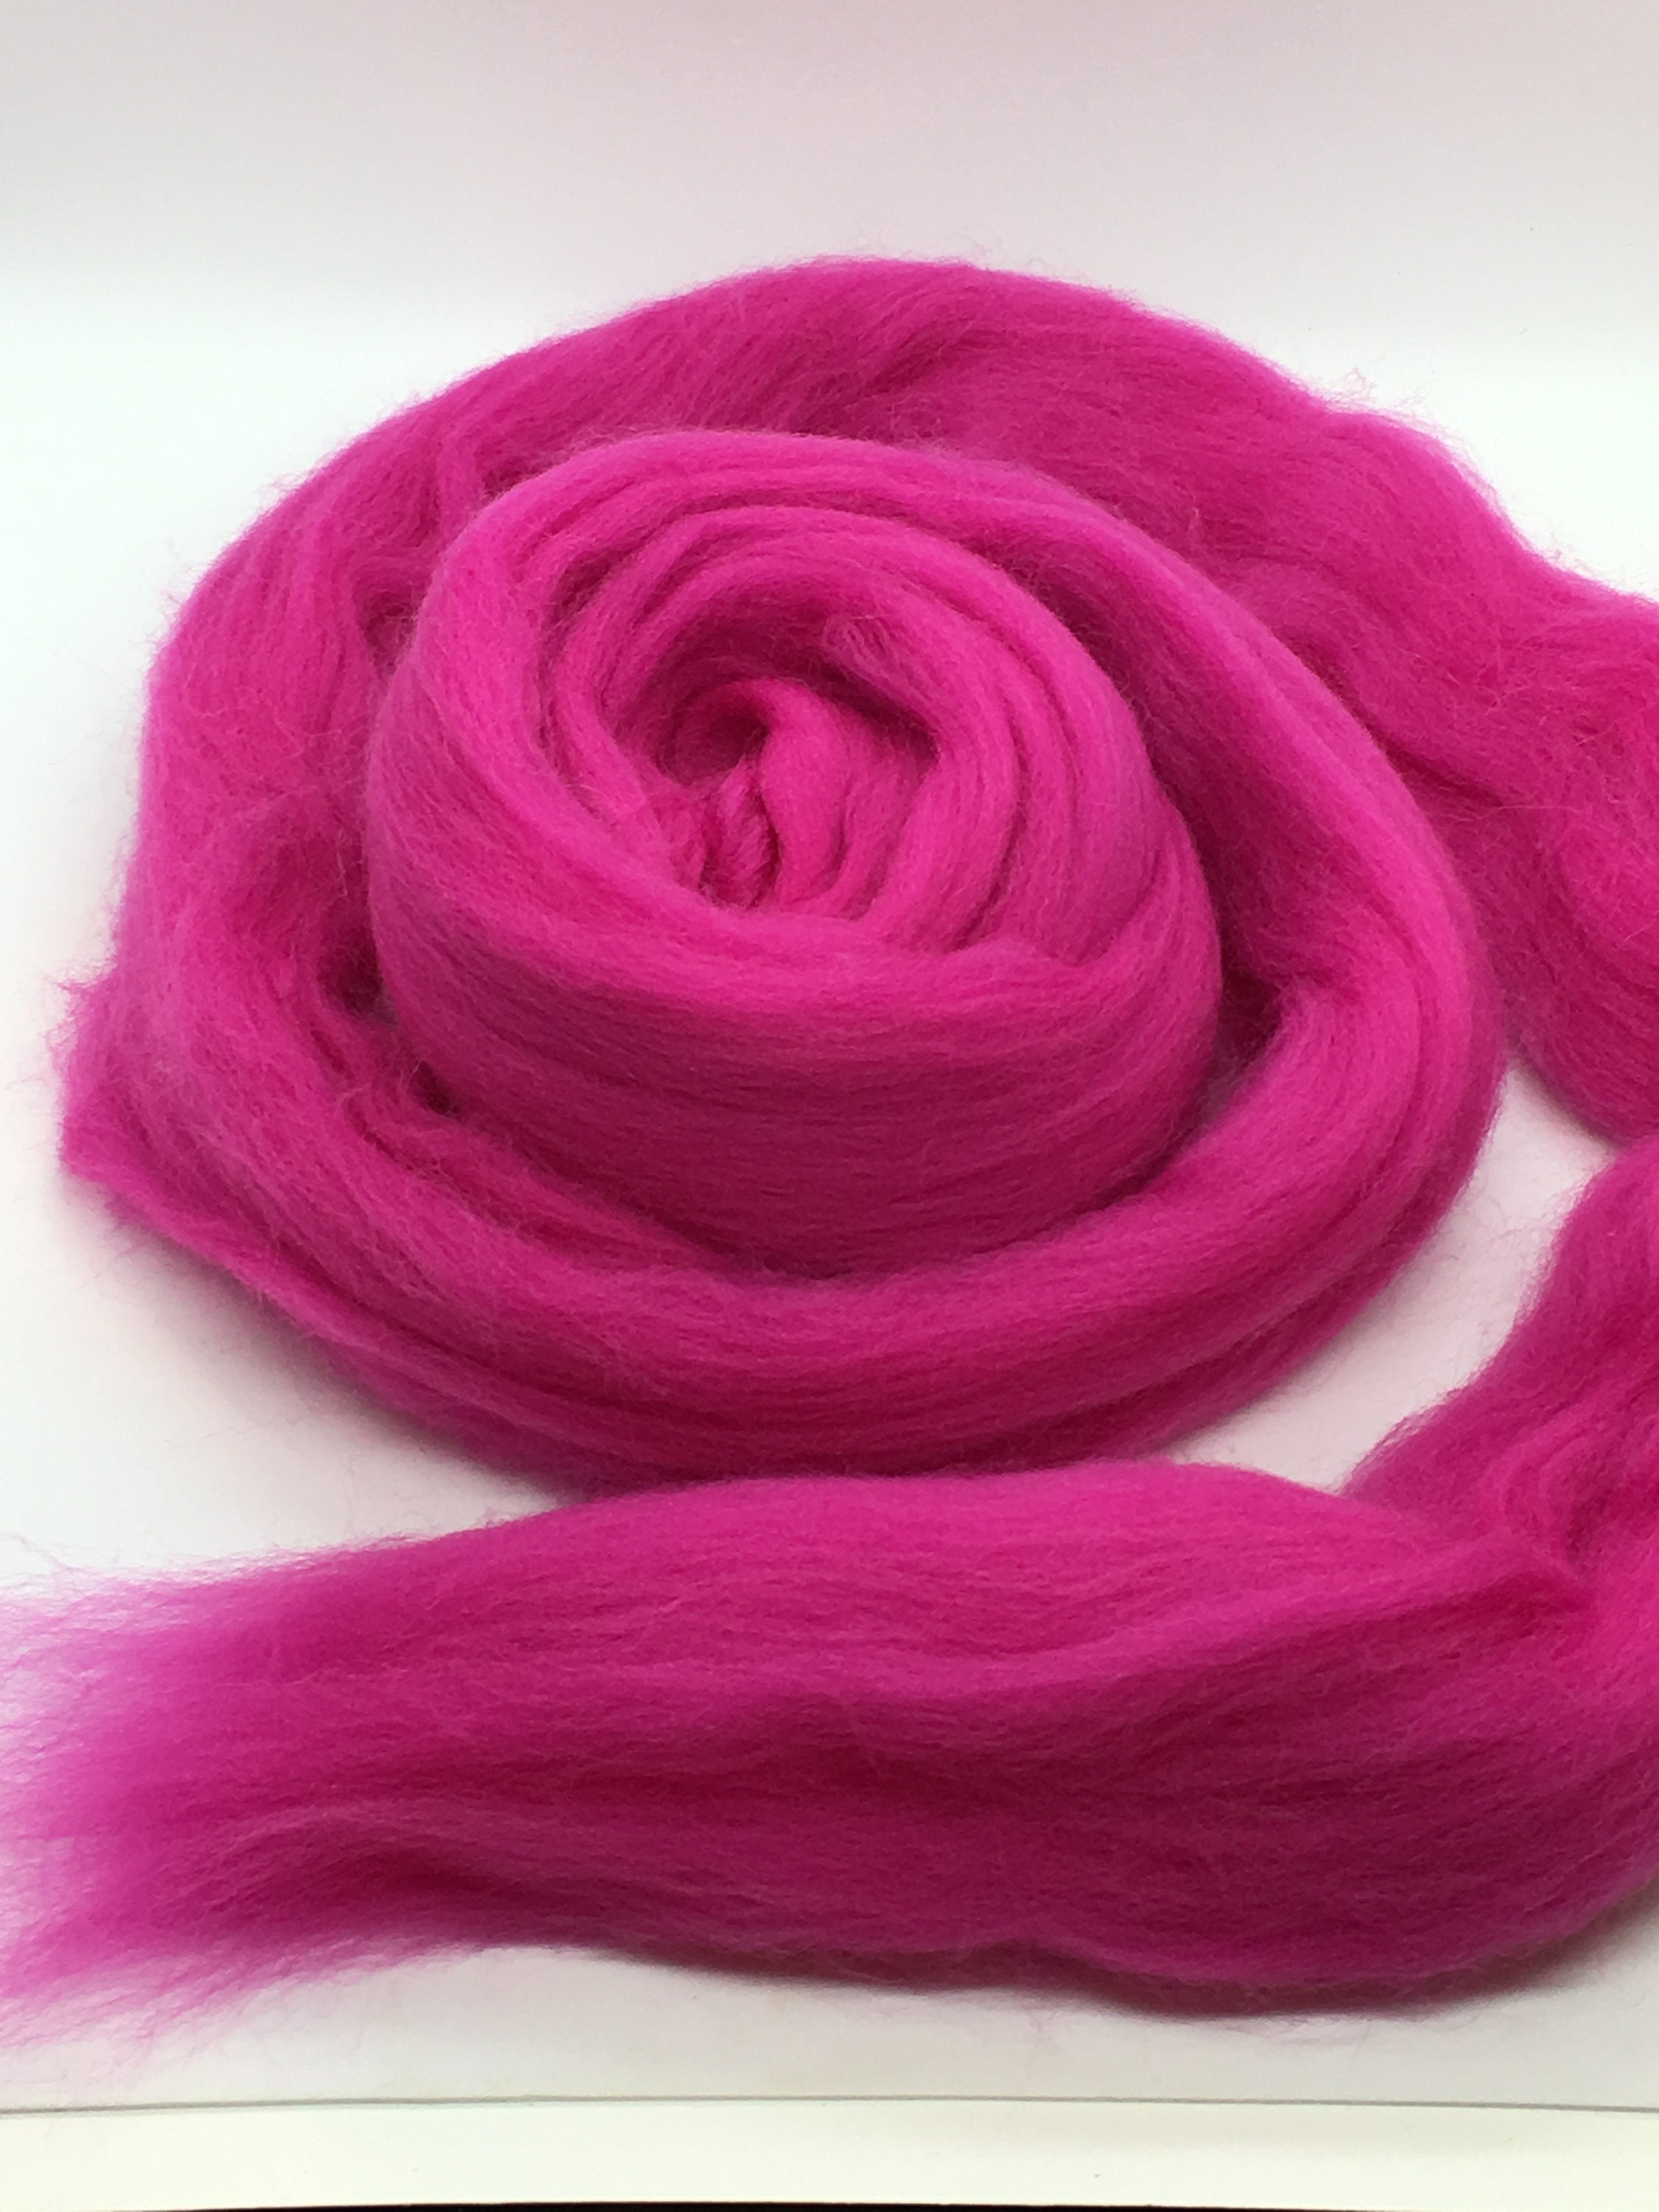 Hot Pink Wool Merino Top Roving Spin into Yarn Needle Felt | Etsy